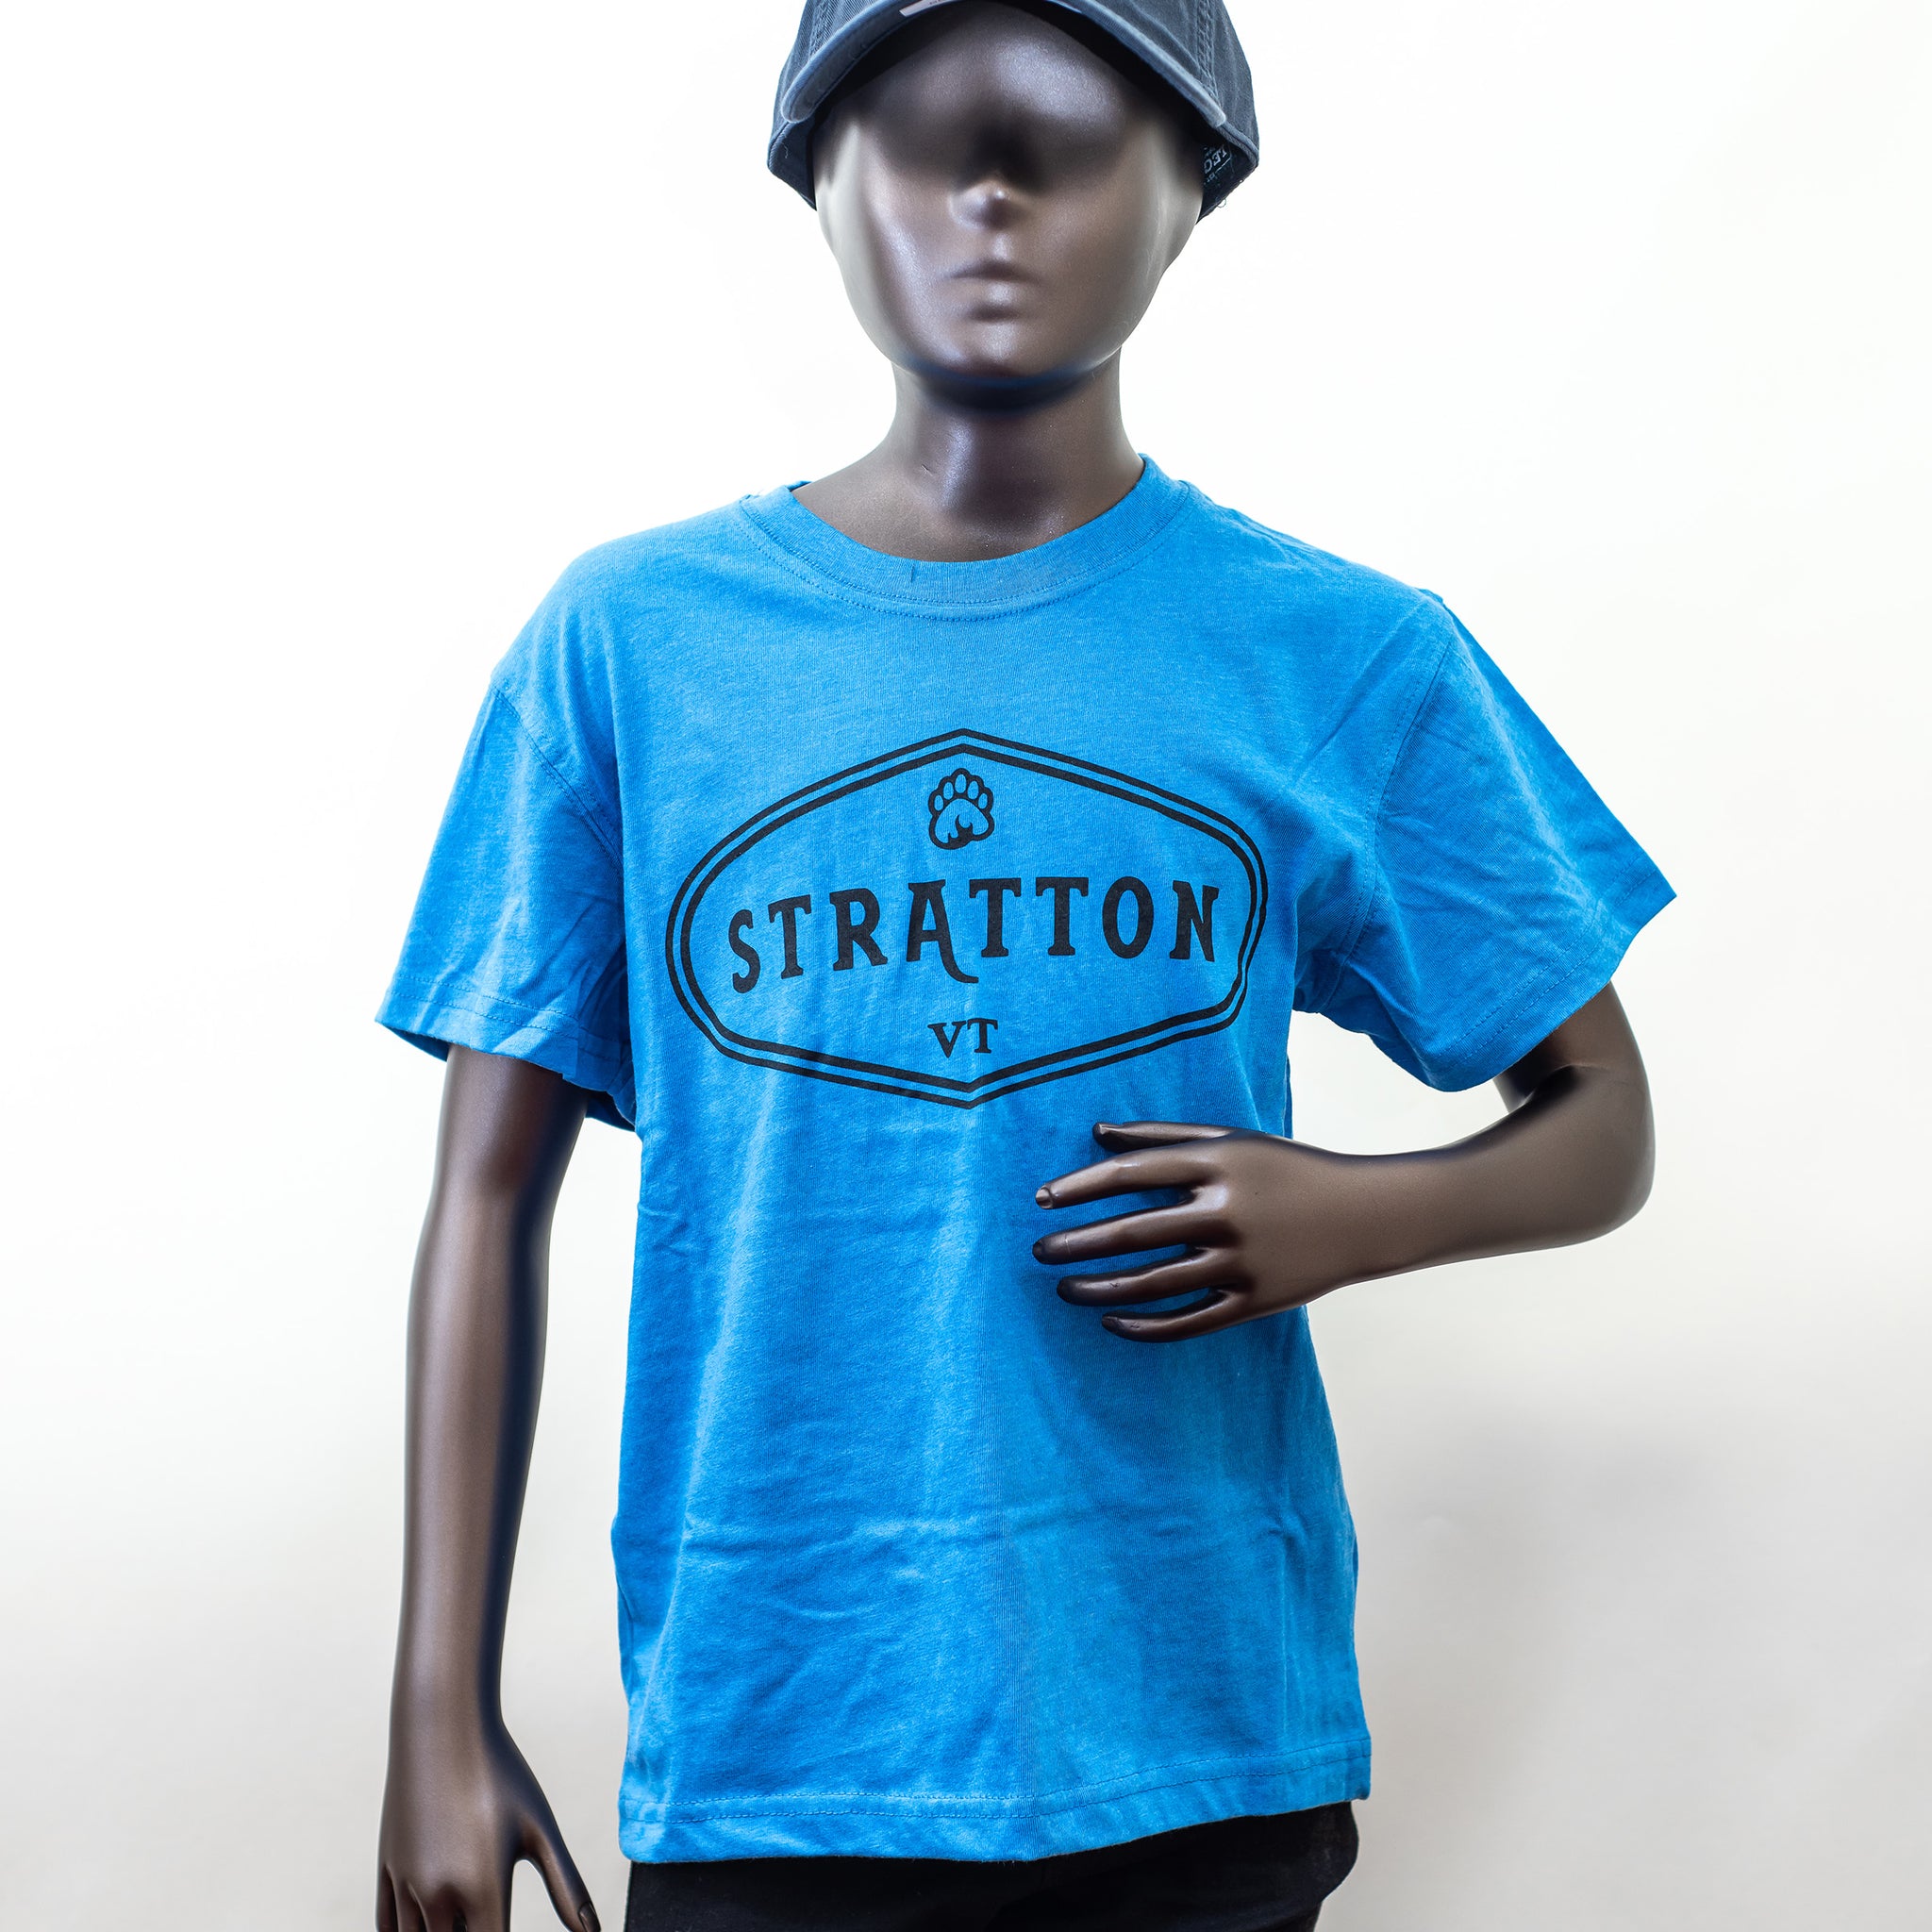 Stratton Youth Short Sleeve T-shirt